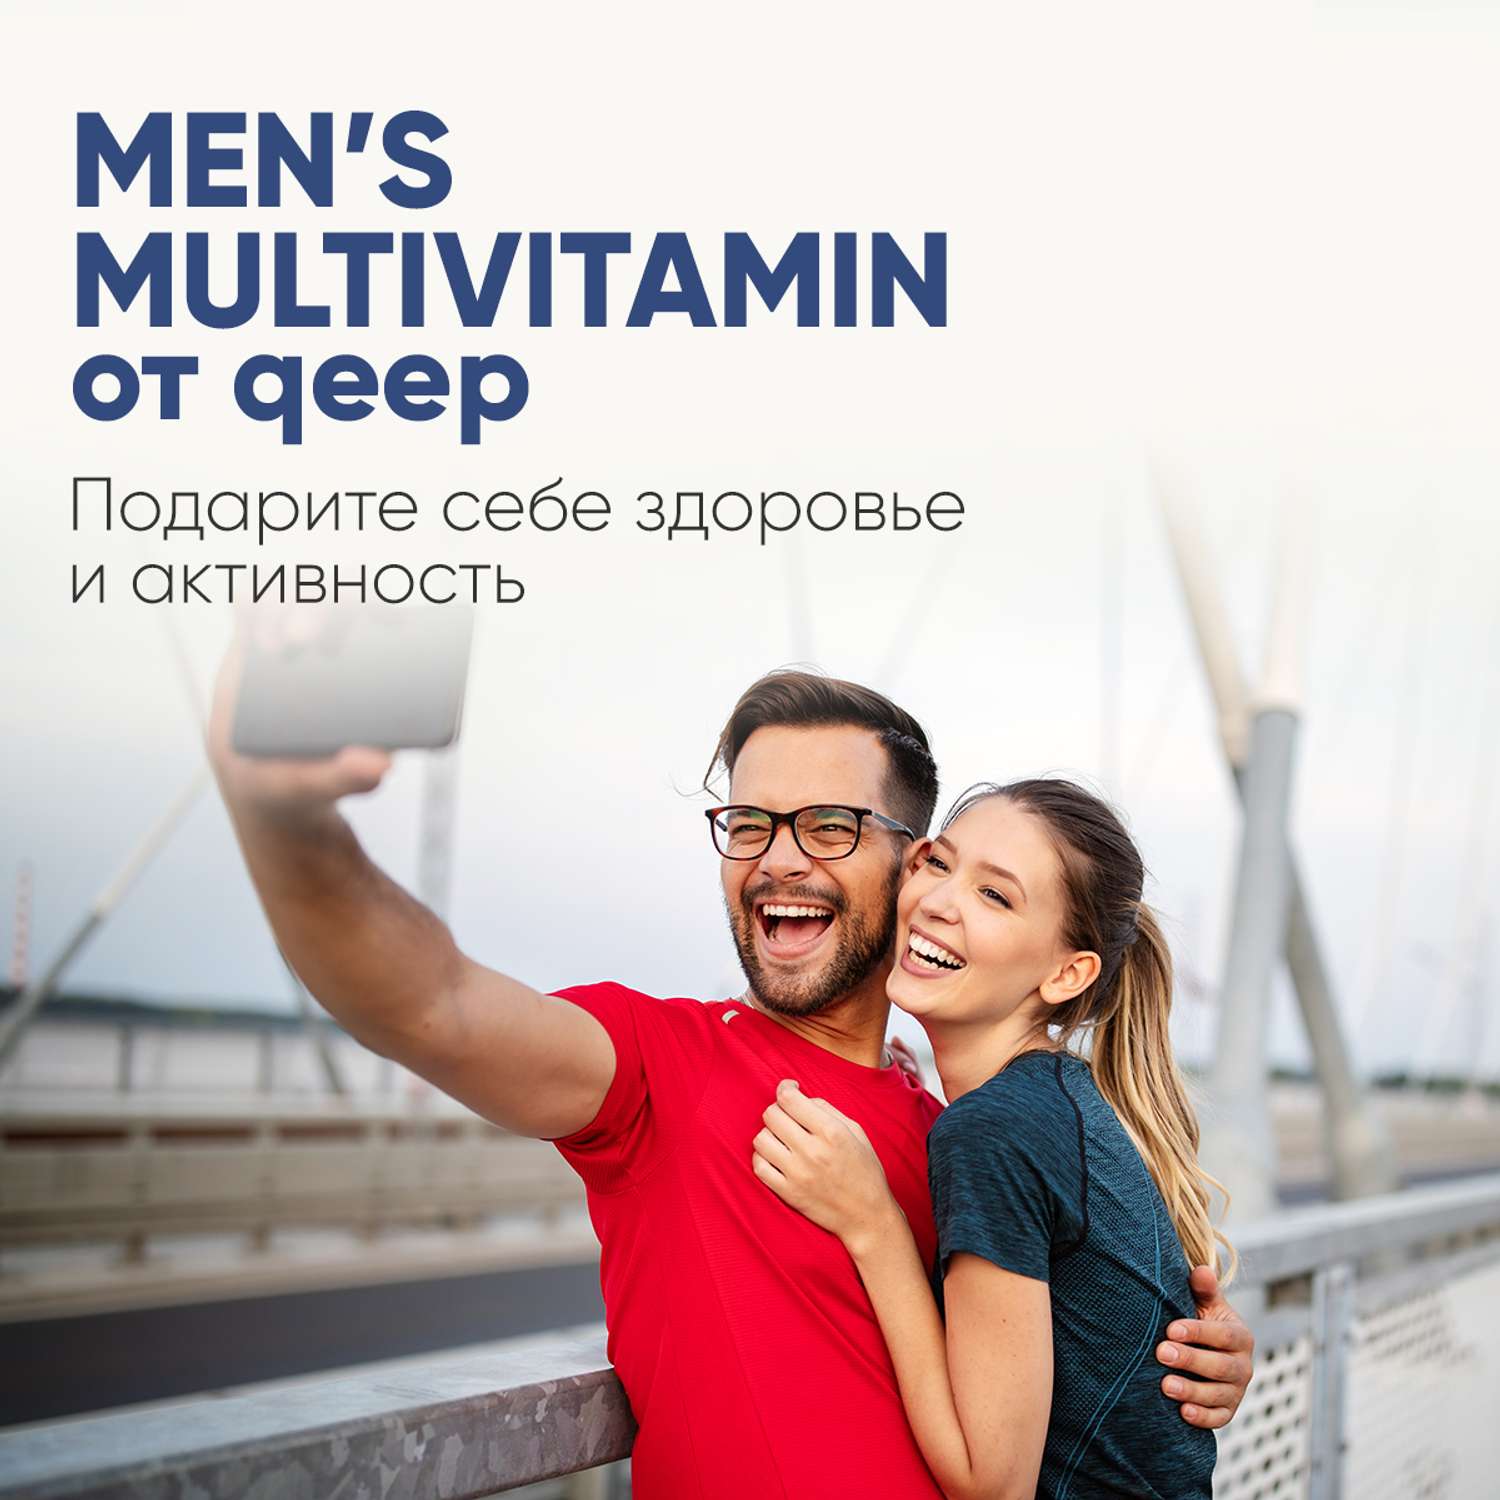 Мультивитамины qeep Омега 3 Д селен q10 multi vitamin витамины - фото 8